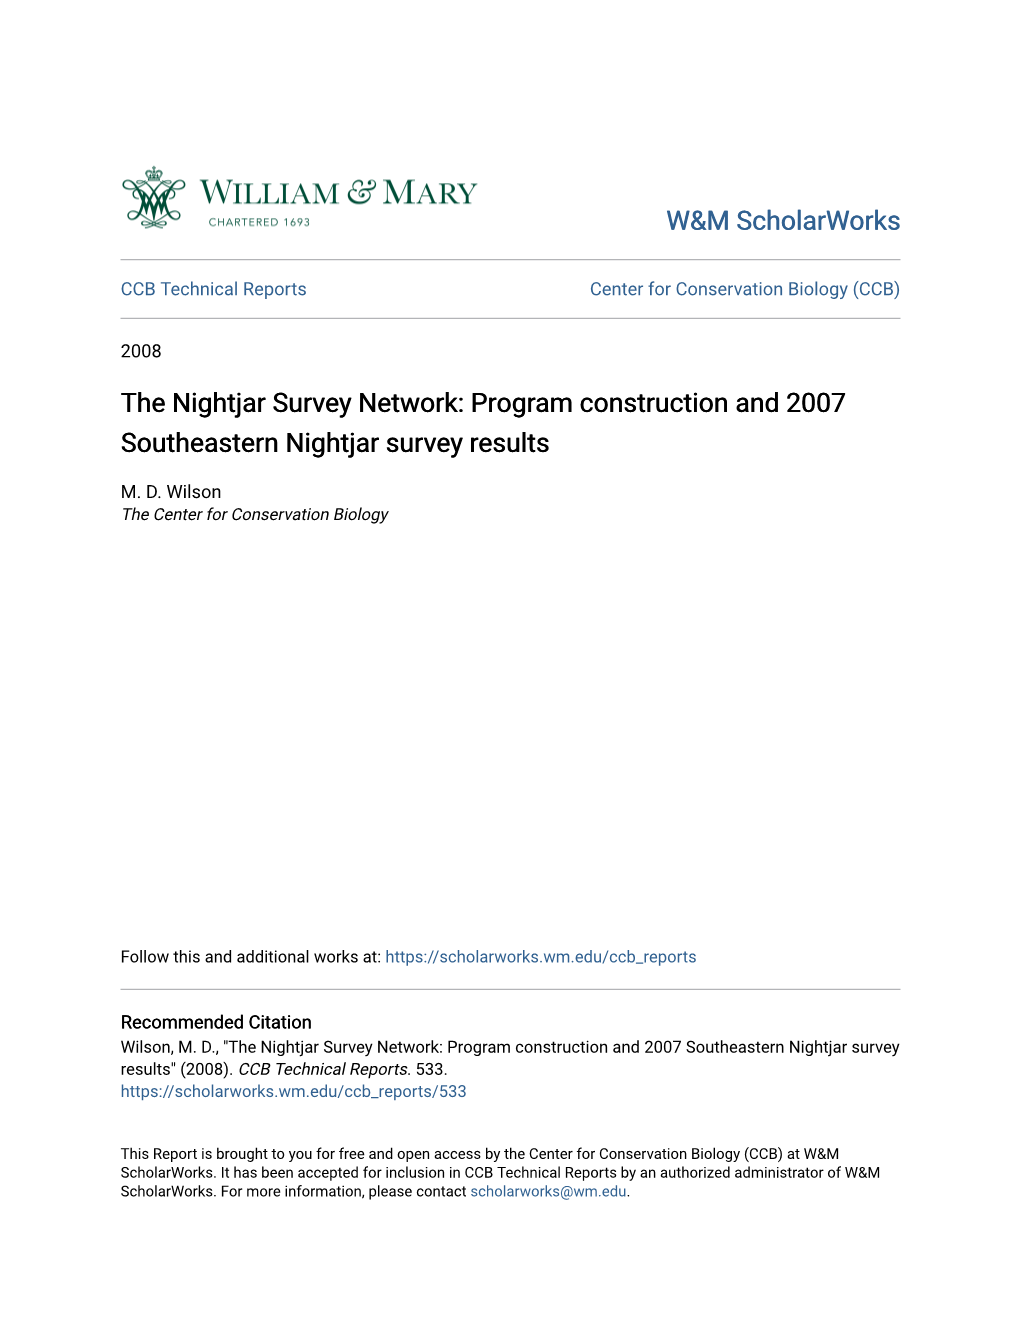 The Nightjar Survey Network: Program Construction and 2007 Southeastern Nightjar Survey Results